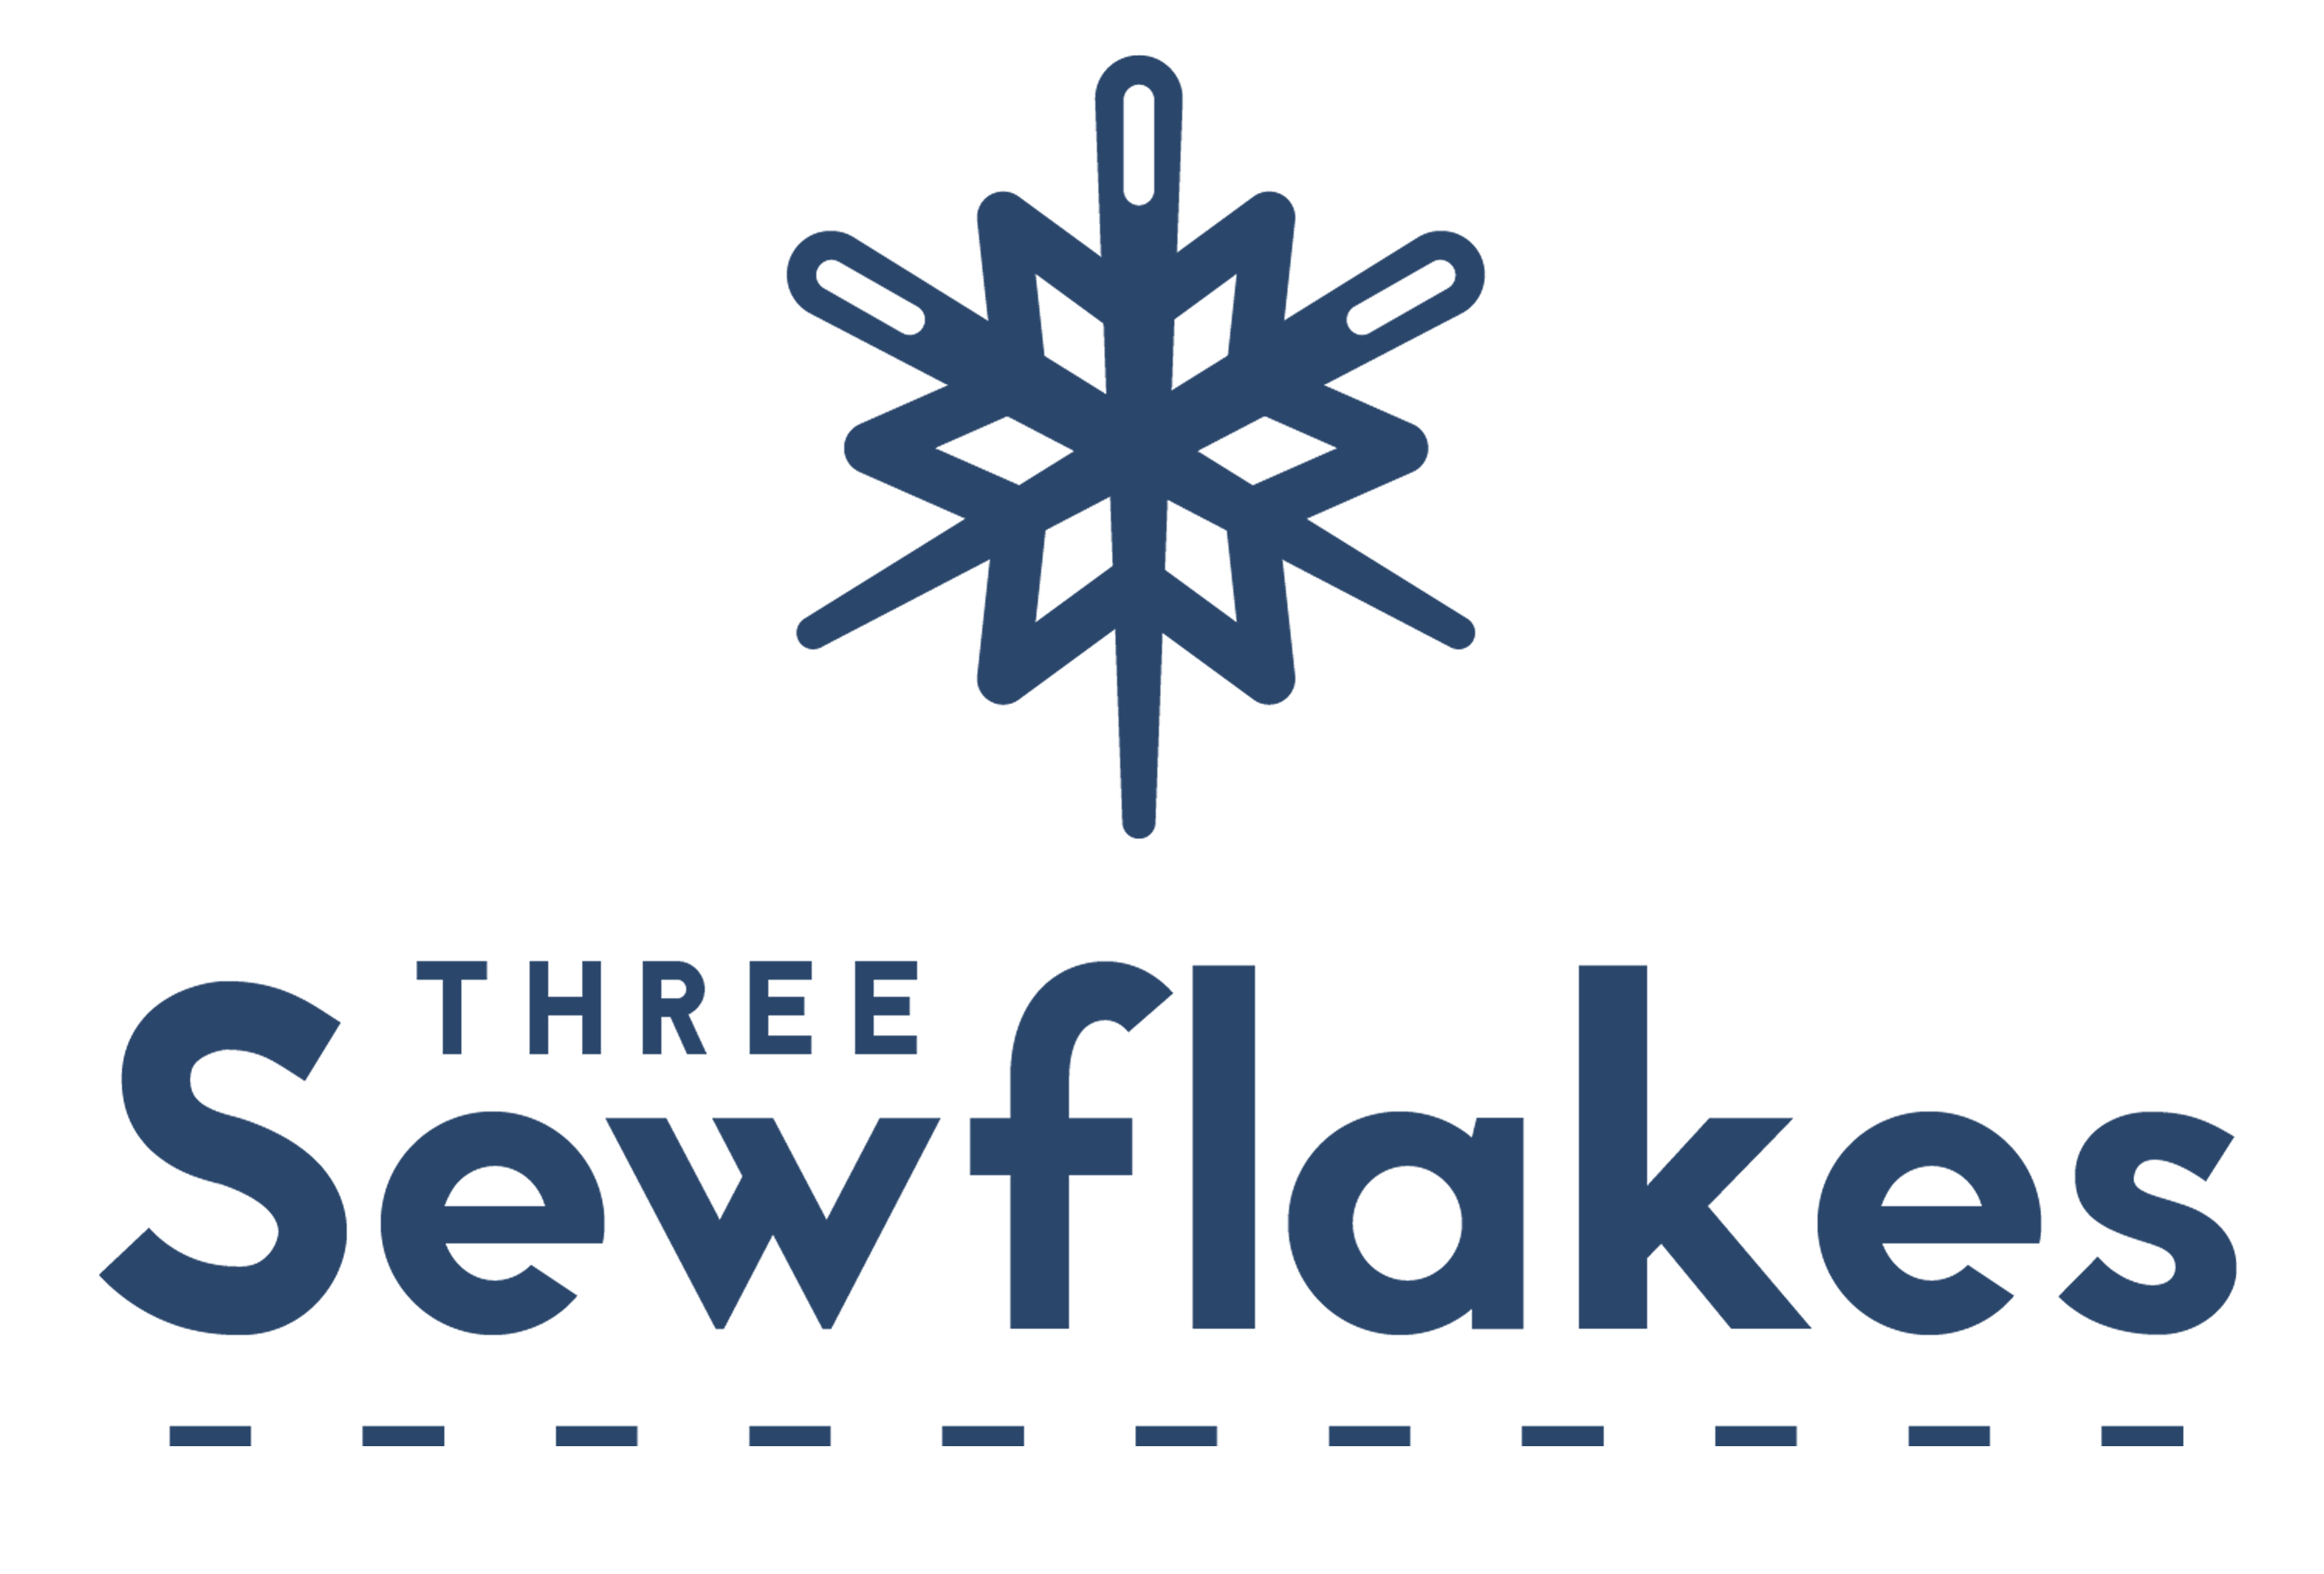 Three Sewflakes